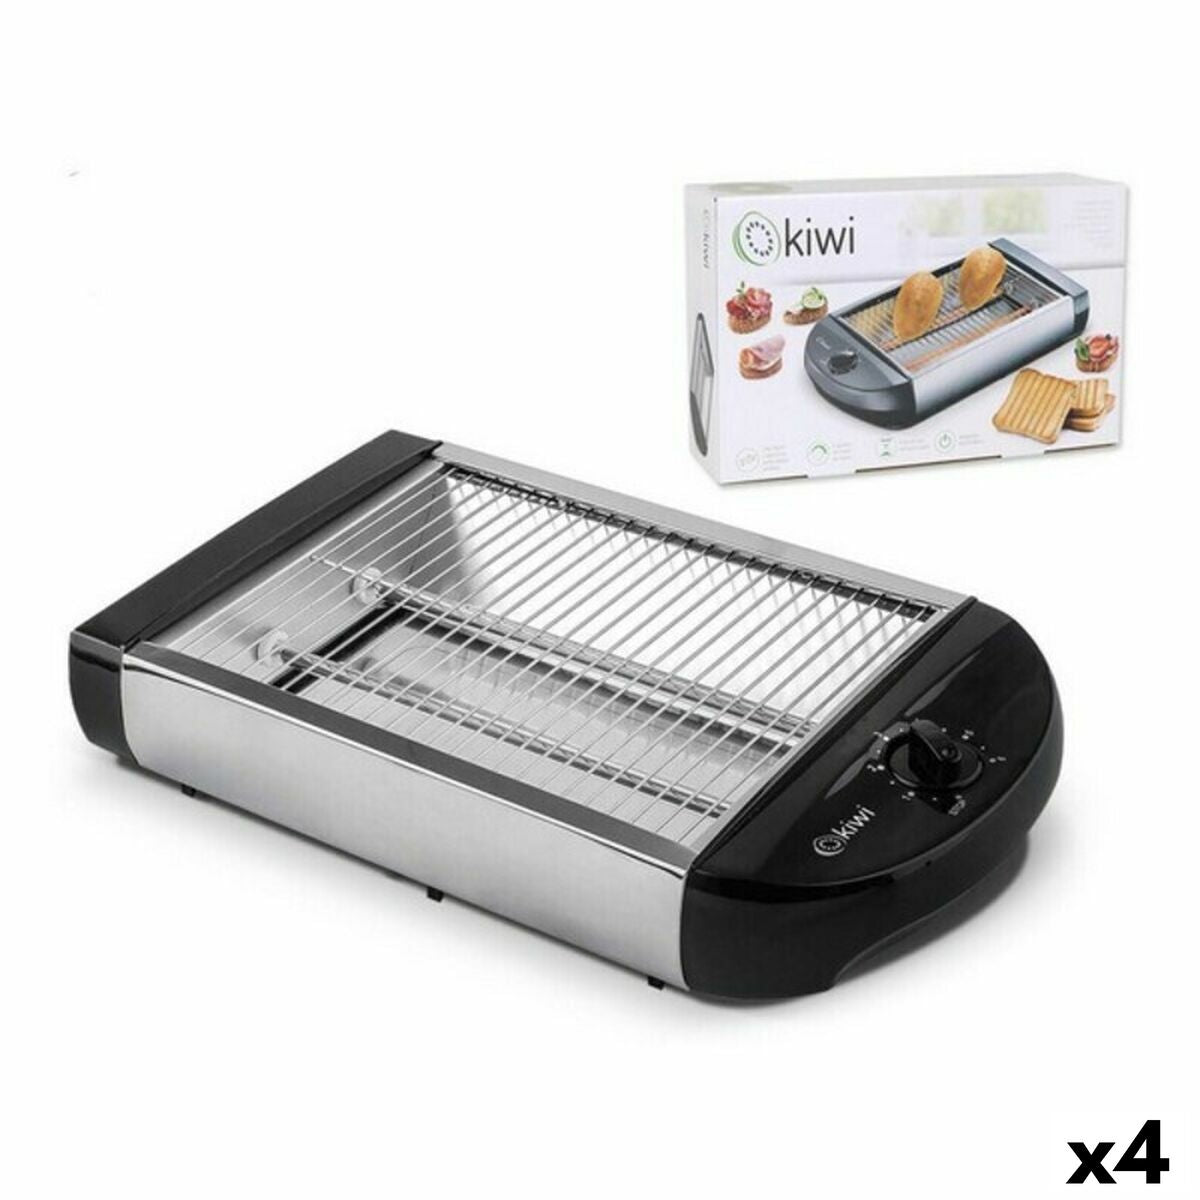 Kaufe Toaster Kiwi 600 W bei AWK Flagship um € 102.00